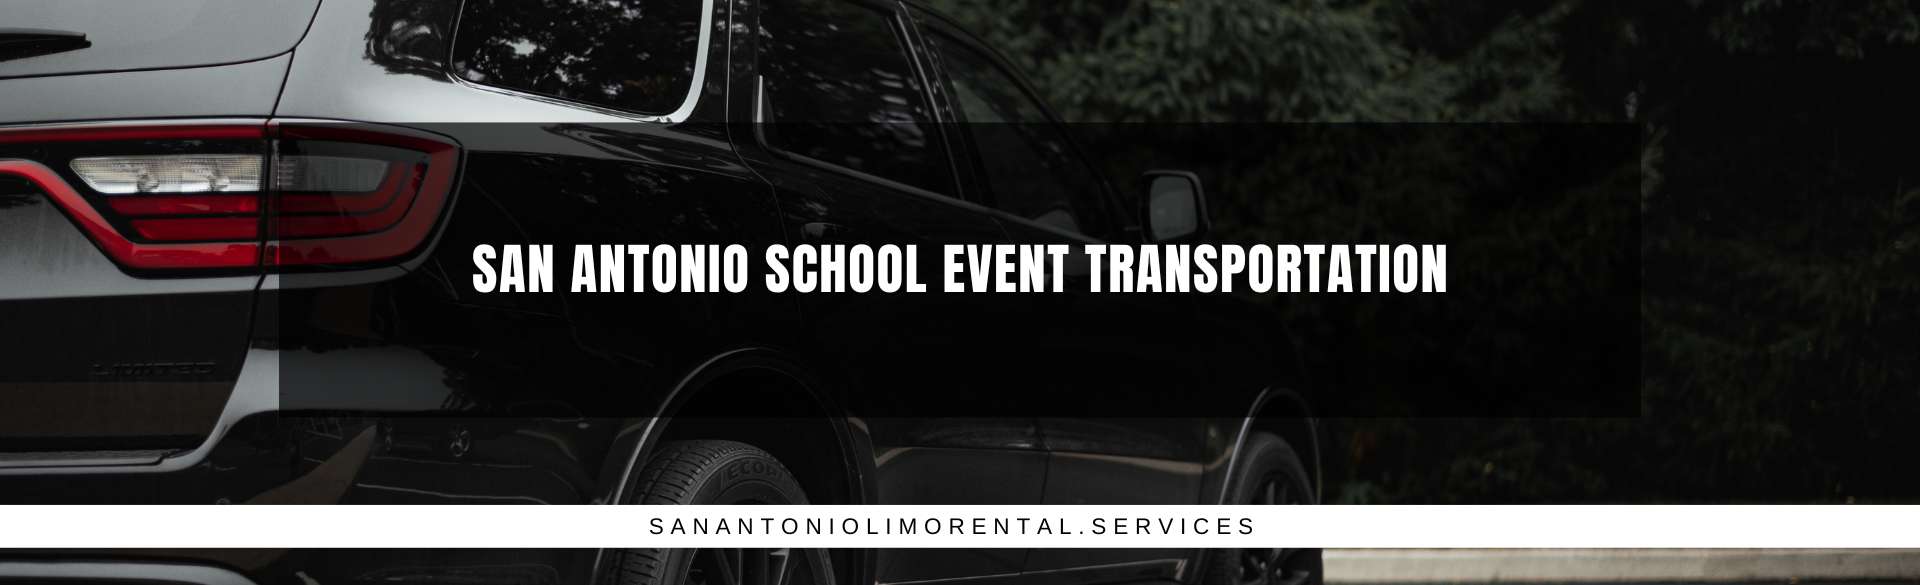 San Antonio School Event Transportation